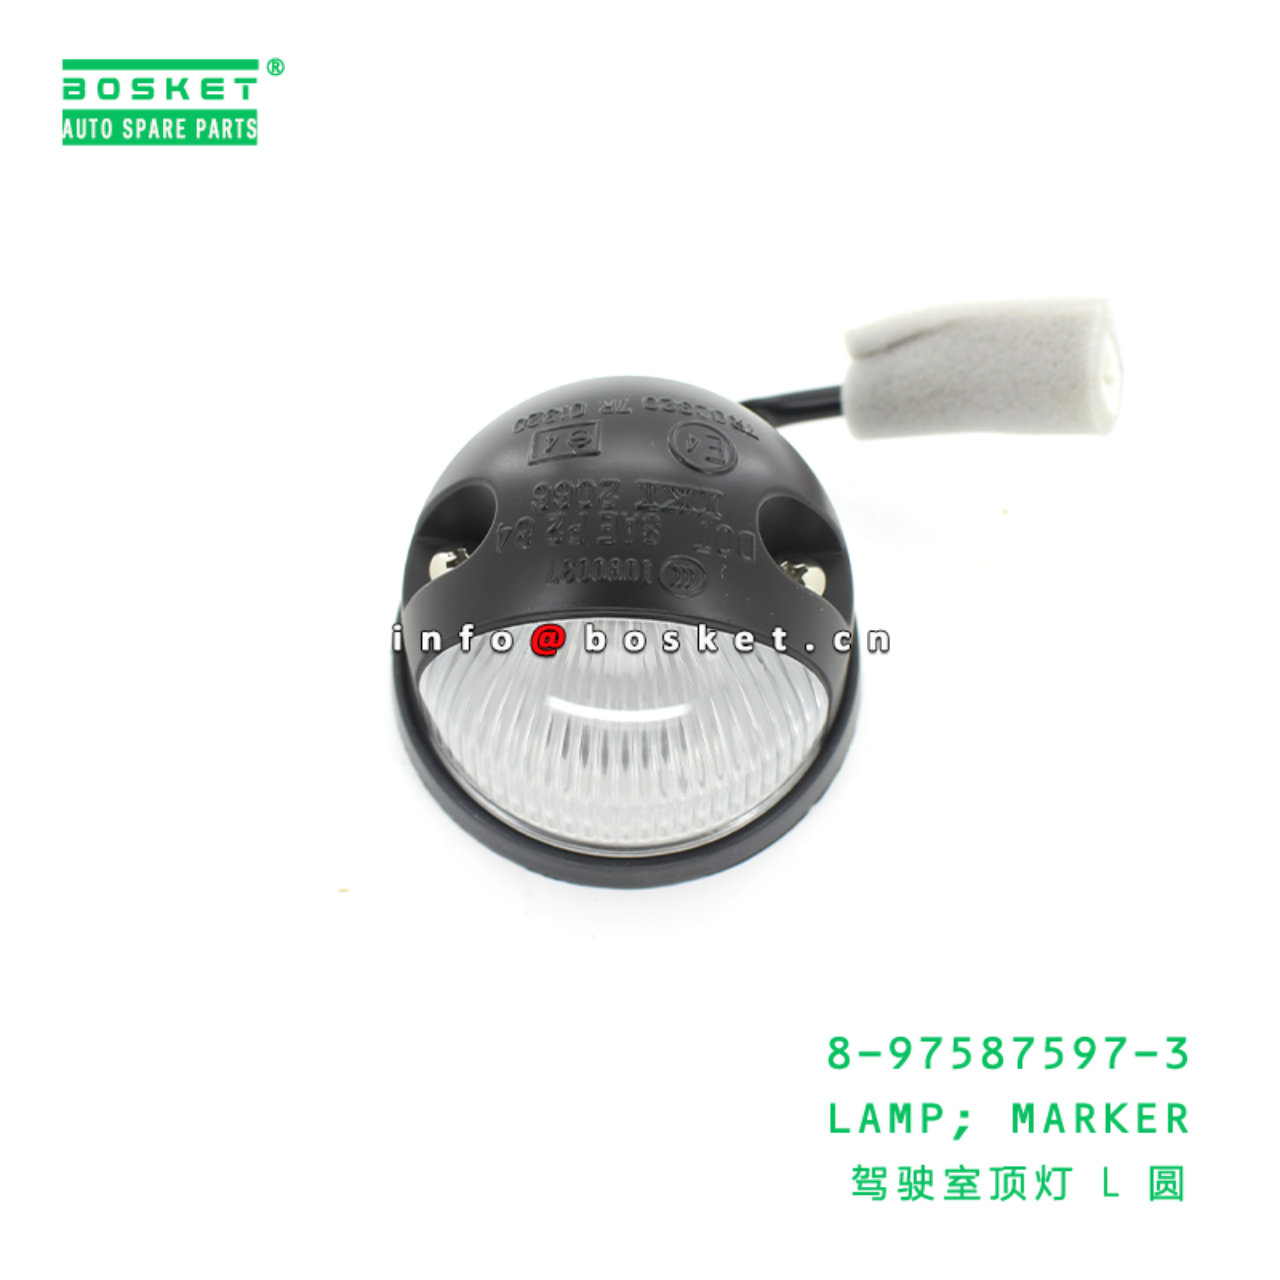 8-97587597-3 Marker Lamp Suitable for ISUZU 700P 4HK1 8975875973